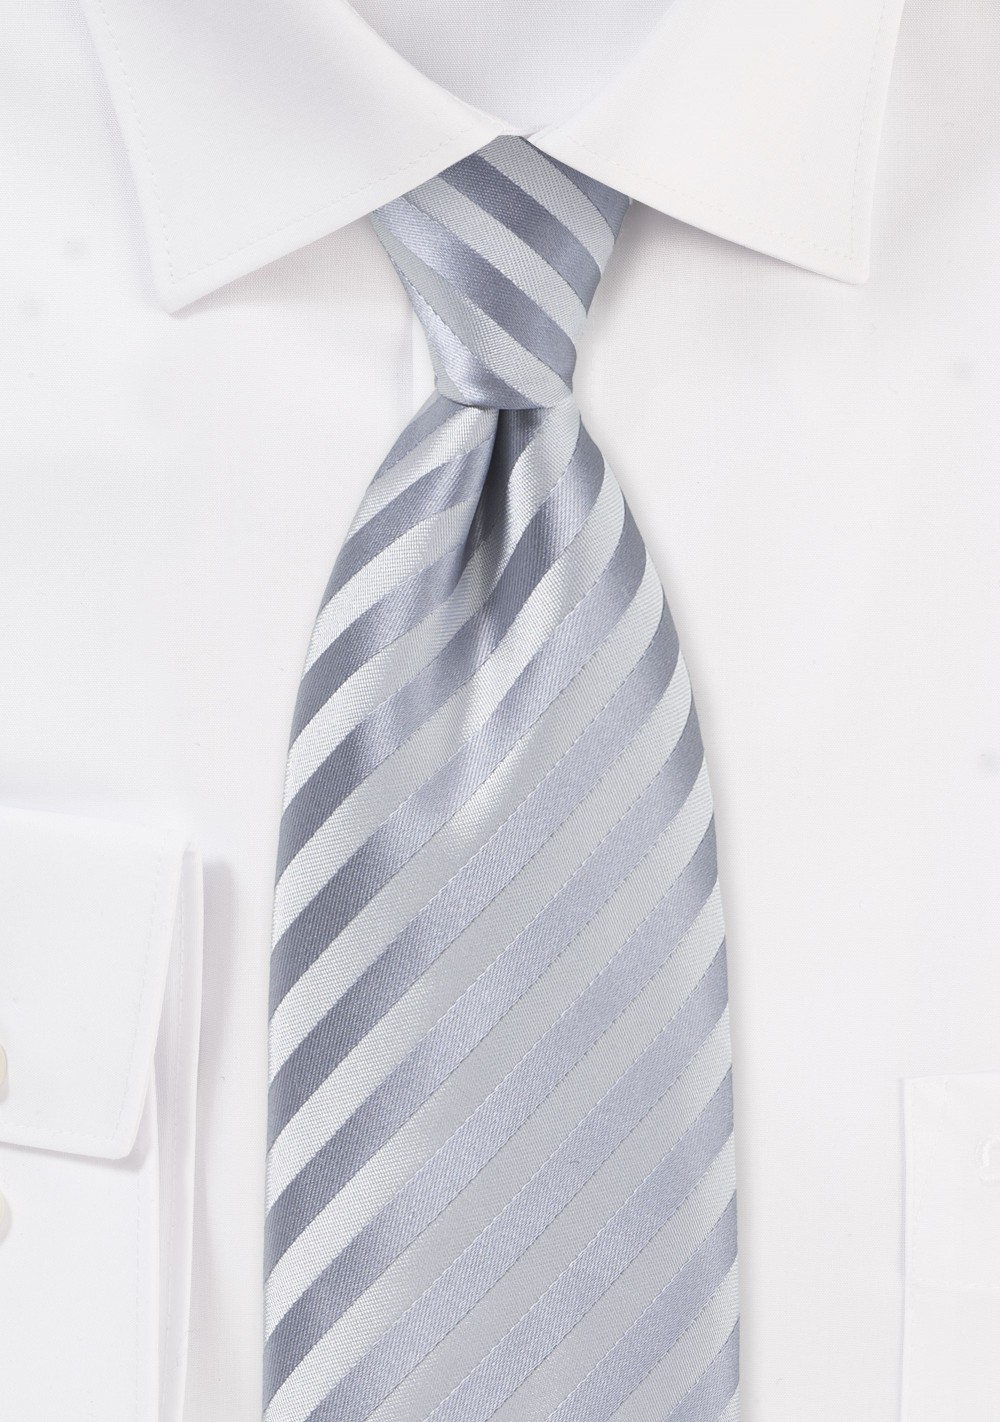 XL Mens Neckties - Silver Necktie in XL Length With Subtle Stripes | Cheap- Neckties.com